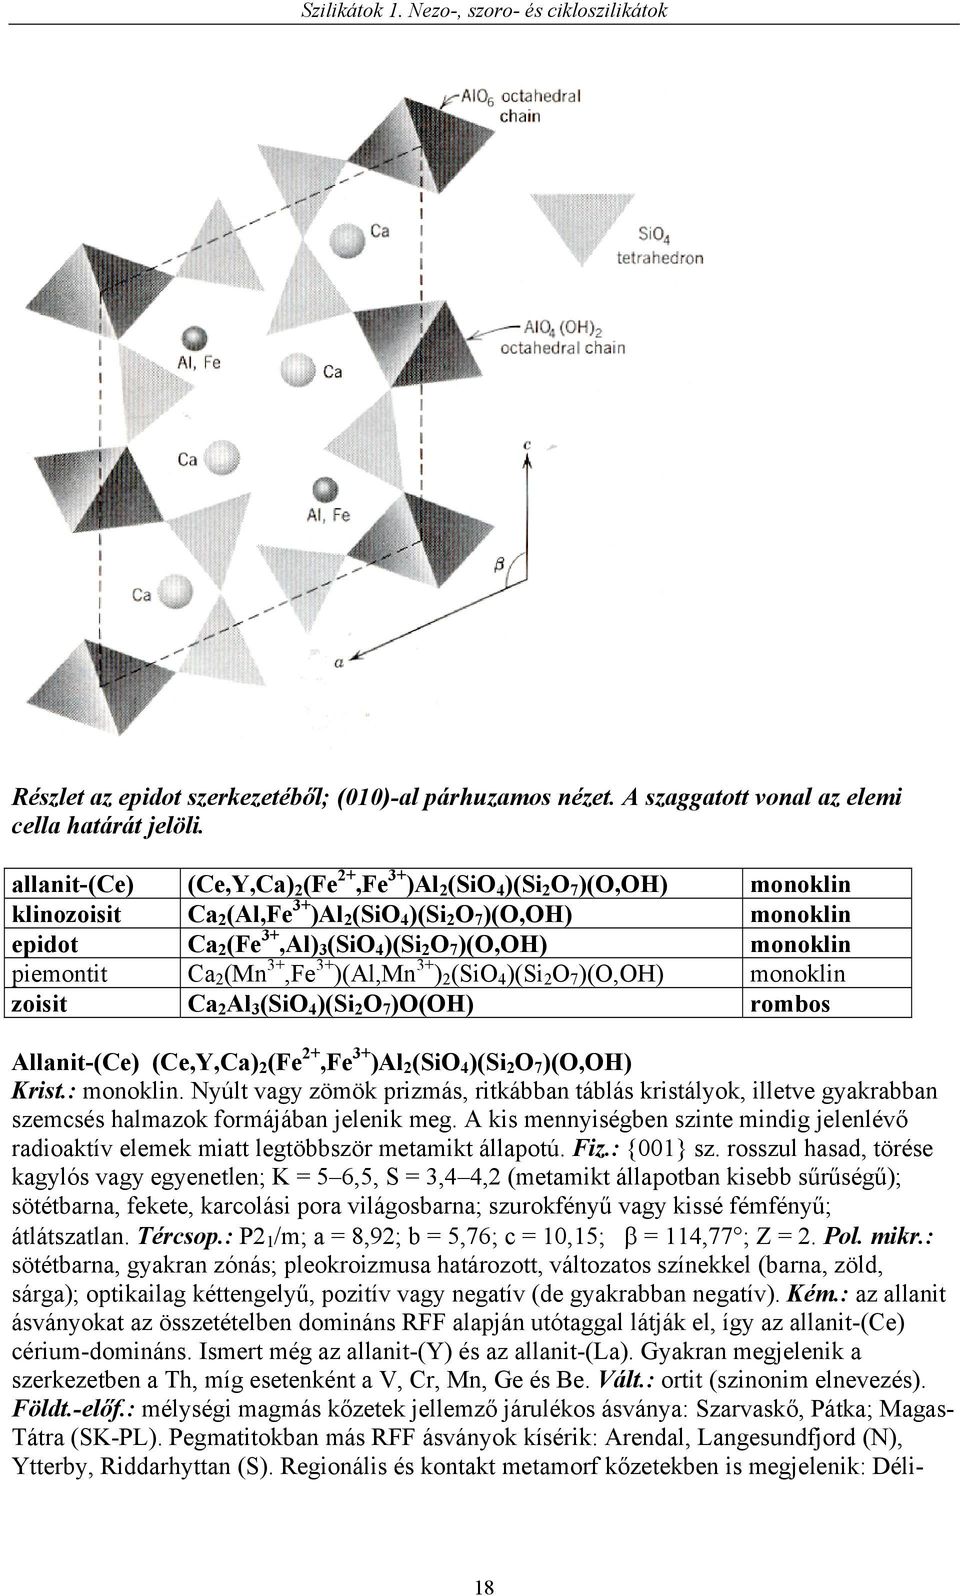 monoklin piemontit Ca 2 (Mn 3+,Fe 3+ )(Al,Mn 3+ ) 2 (SiO 4 )(Si 2 O 7 )(O,OH) monoklin zoisit Ca 2 Al 3 (SiO 4 )(Si 2 O 7 )O(OH) rombos Allanit-(Ce) (Ce,Y,Ca) 2 (Fe 2+,Fe 3+ )Al 2 (SiO 4 )(Si 2 O 7